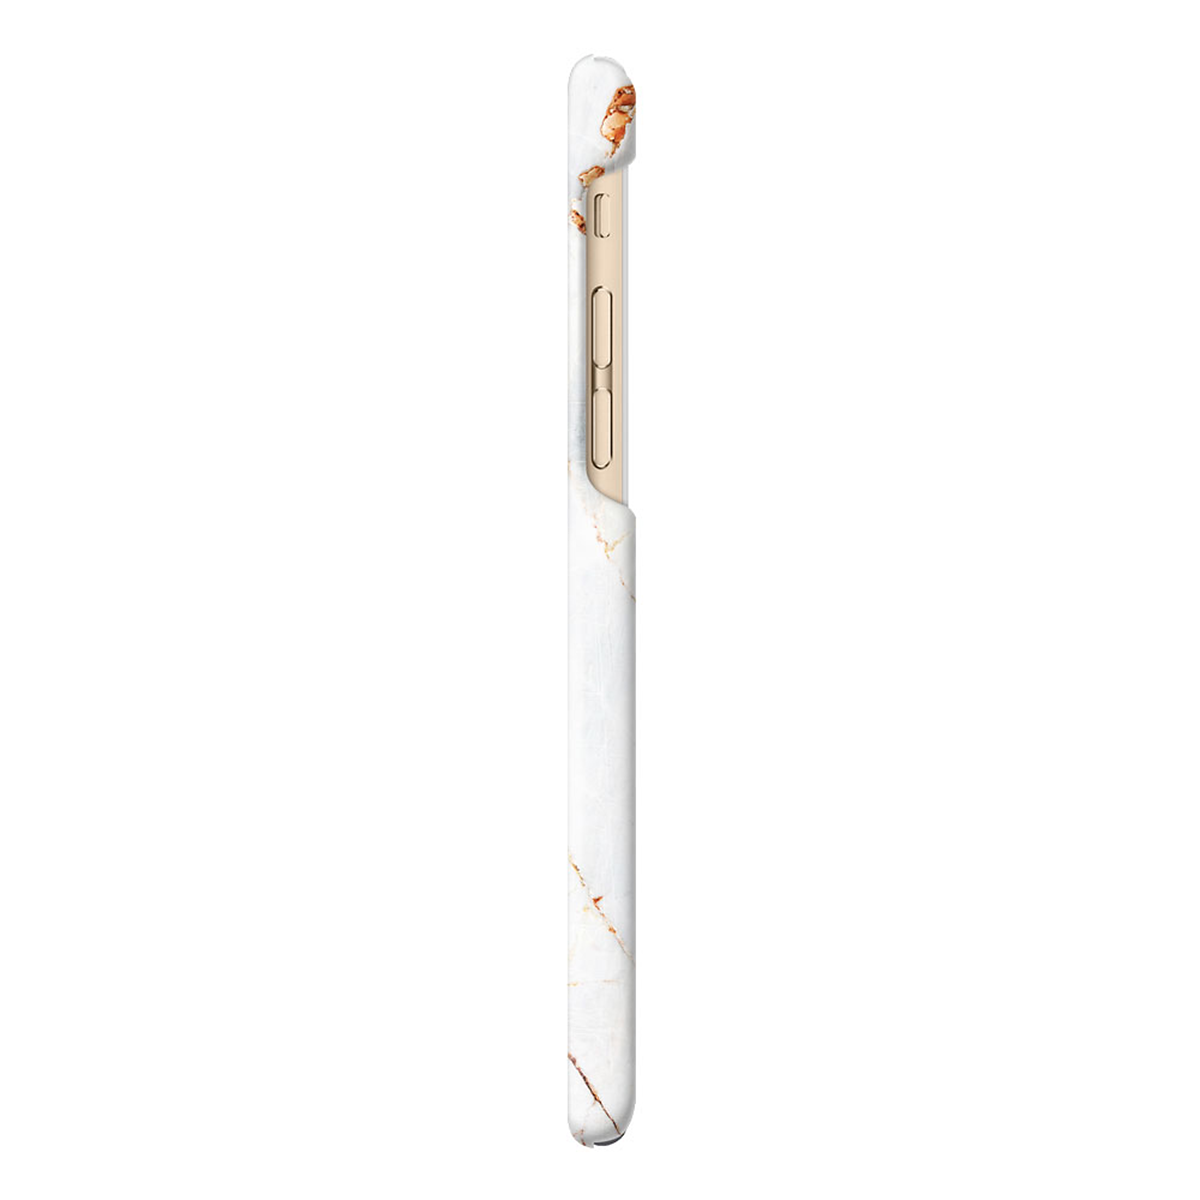 iDeal Fashion Case magnetskal iPhone 8/7/6, Carrara Gold